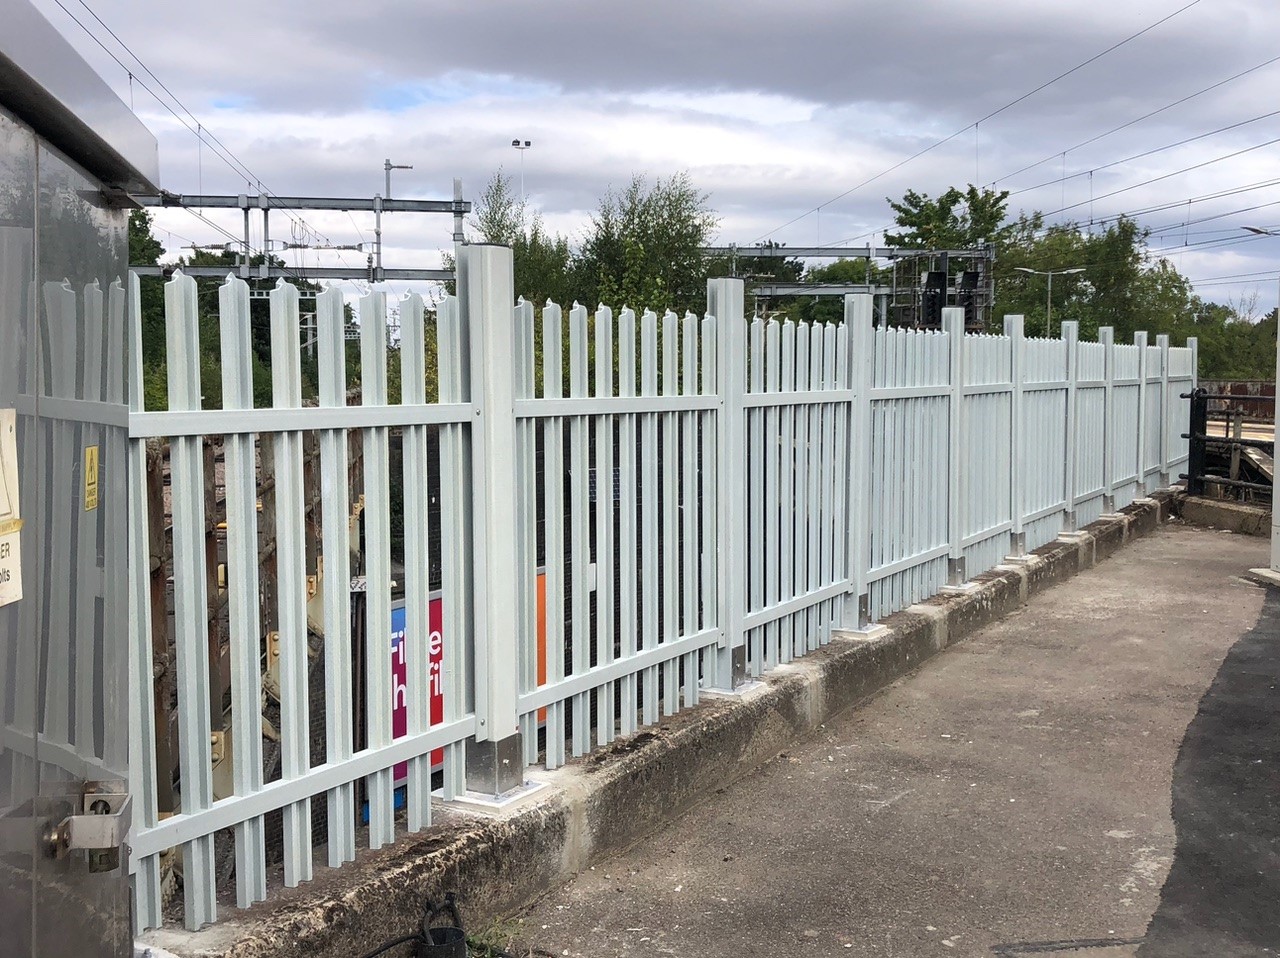 TouchSAFE palisade fencing installed on railway platform